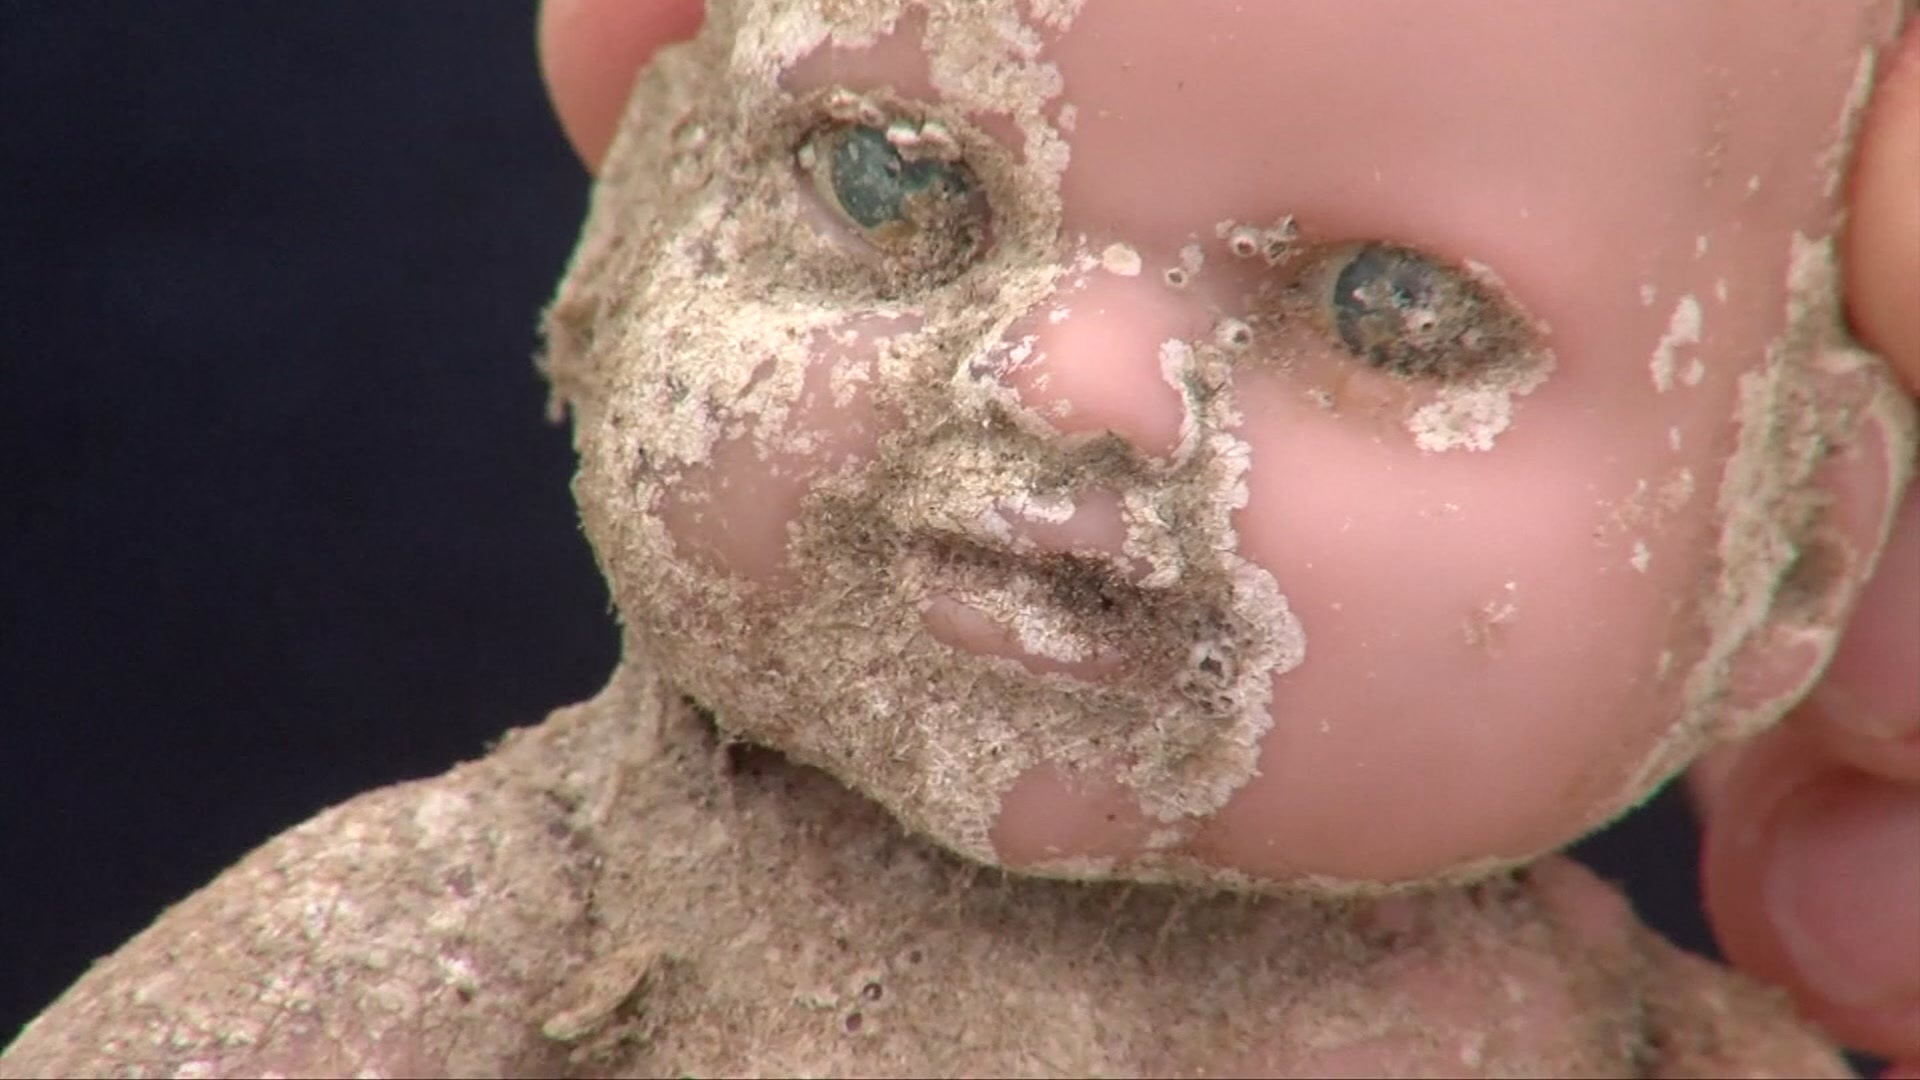 Creepy Dolls Keep Washing Up on Texas Beaches – NBC 5 Dallas-Fort Worth